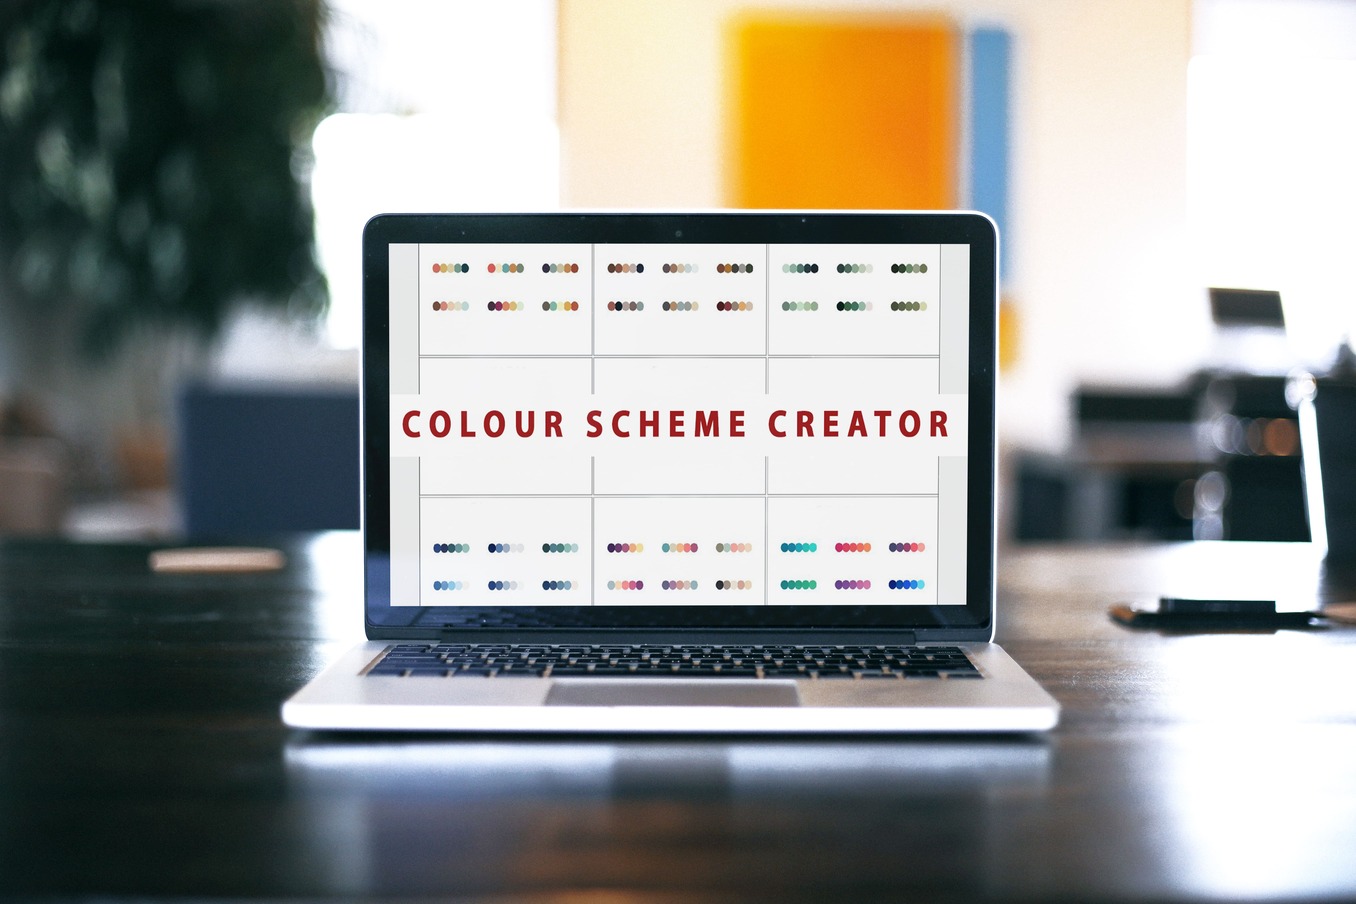 Colour Scheme Creator On The Laptop.